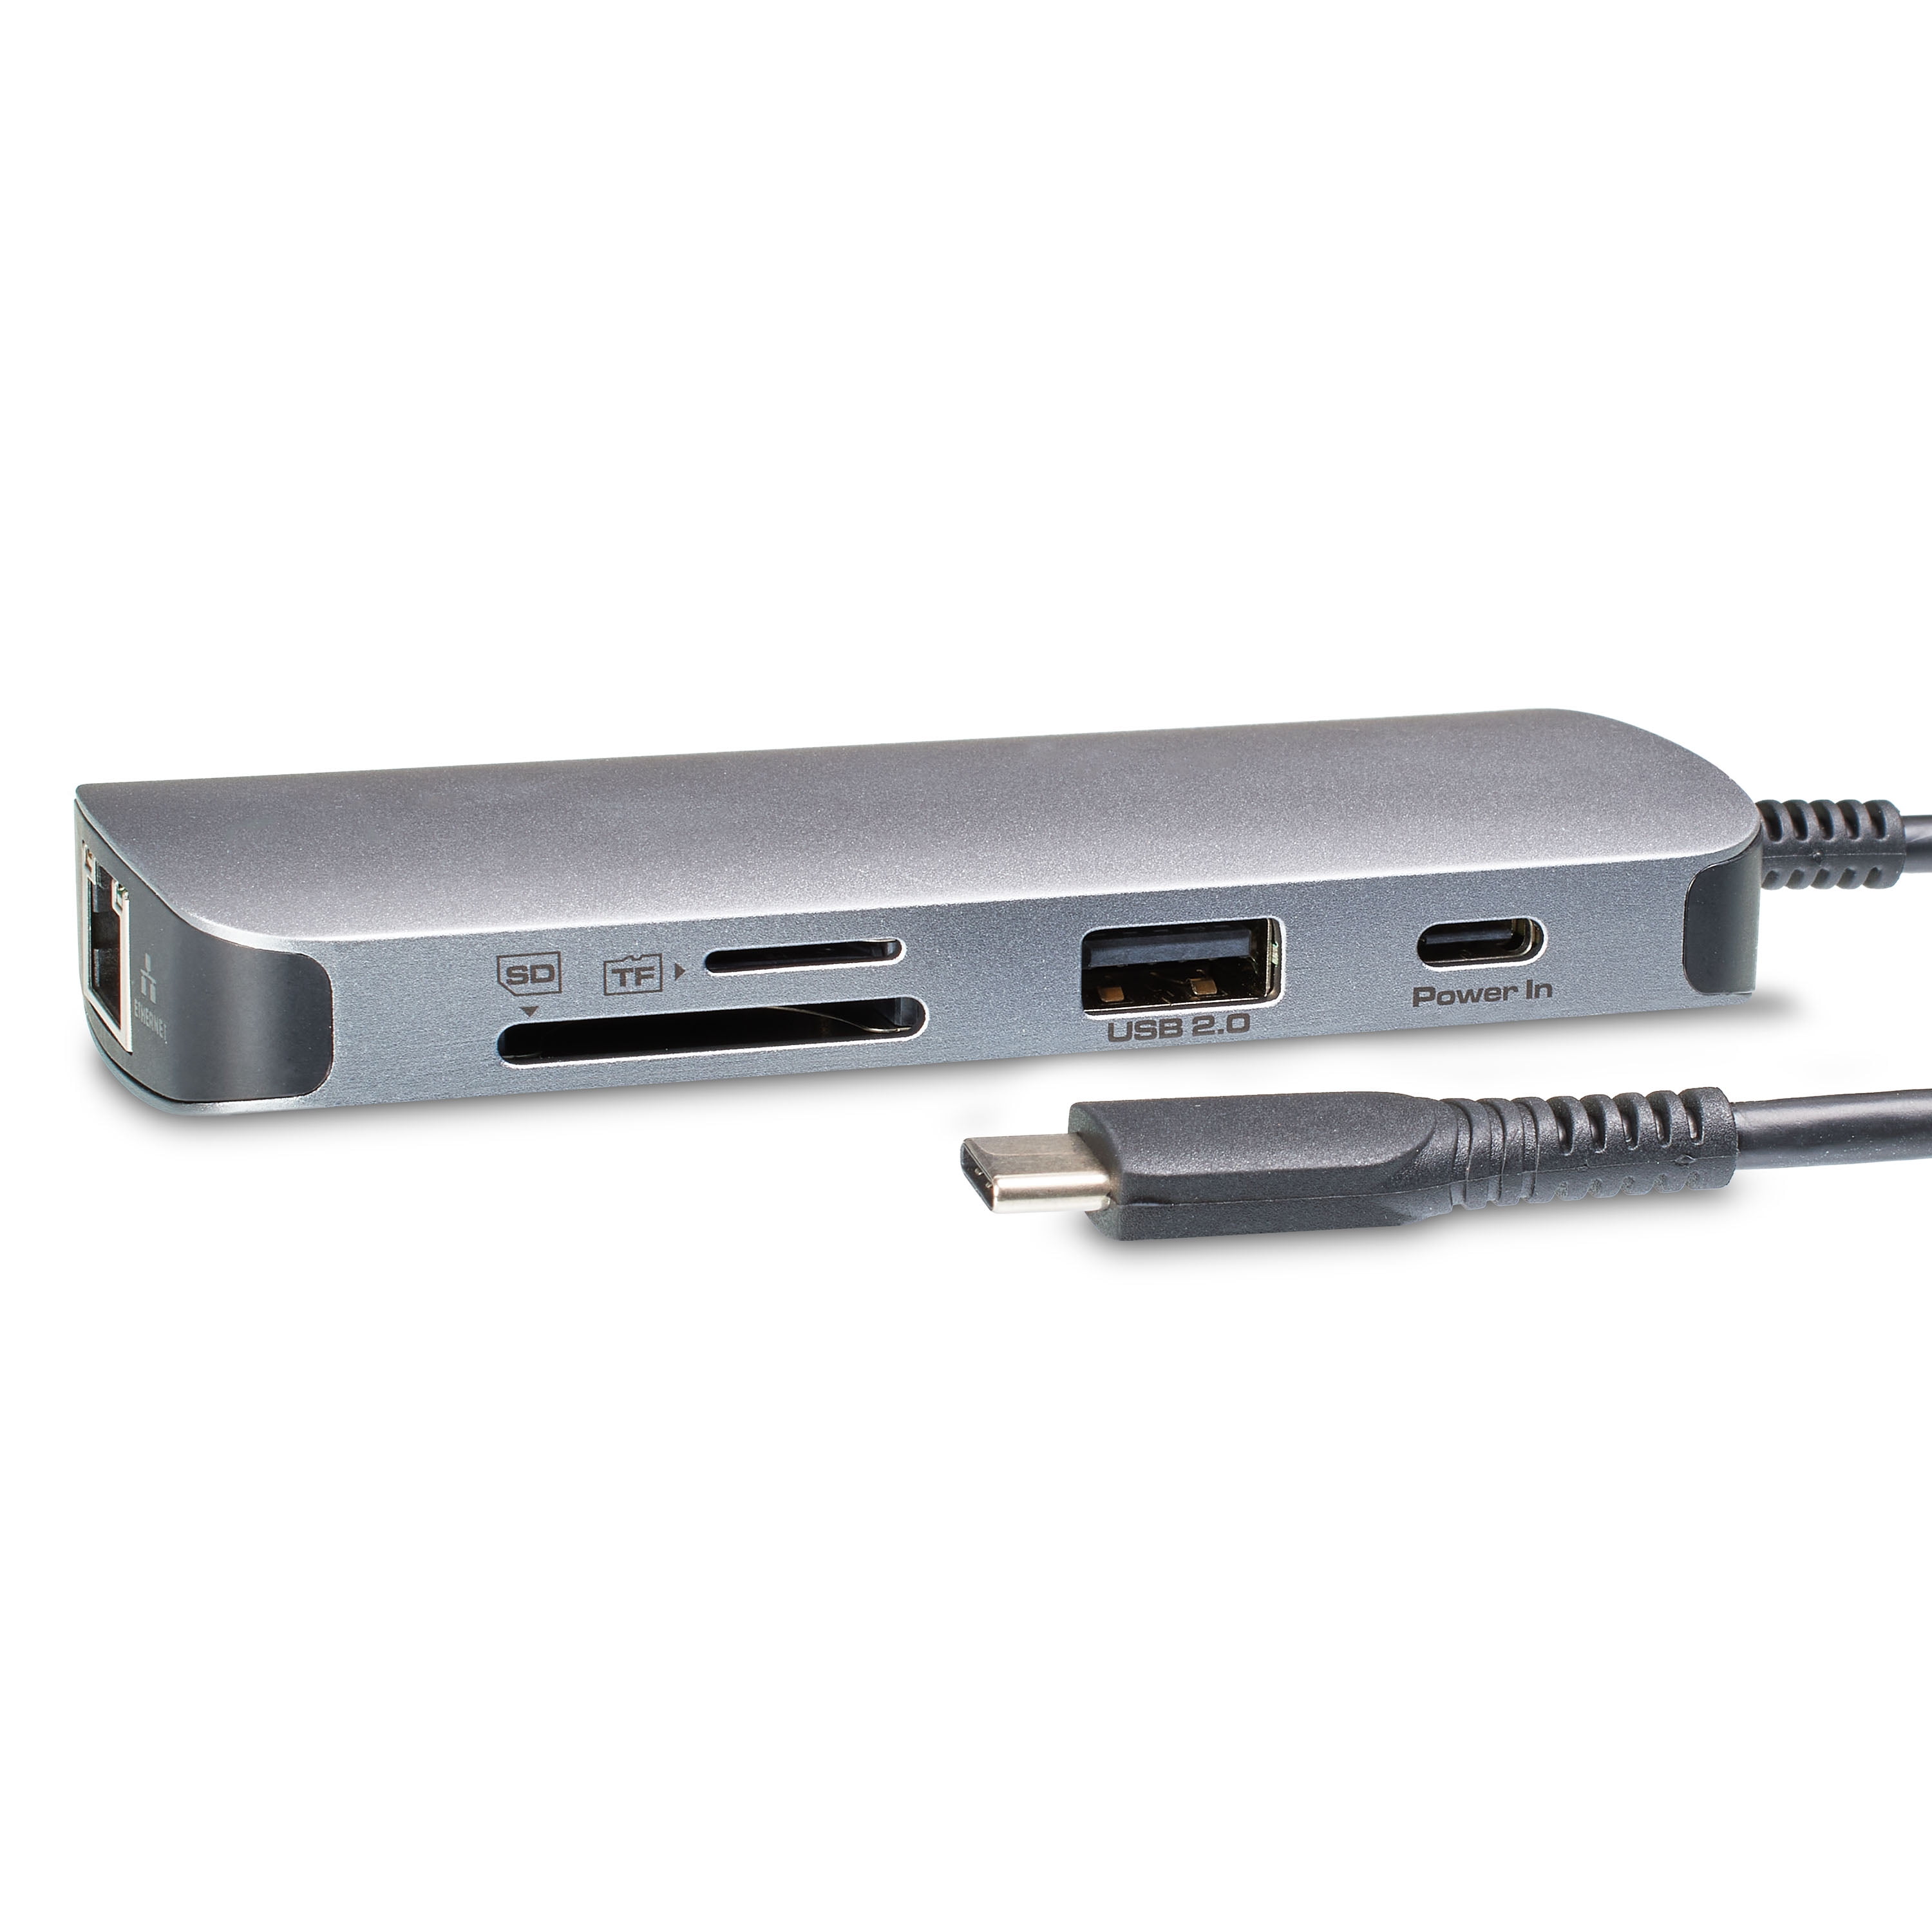 onn. 6 USB-C to HDMI Adapter, Black 